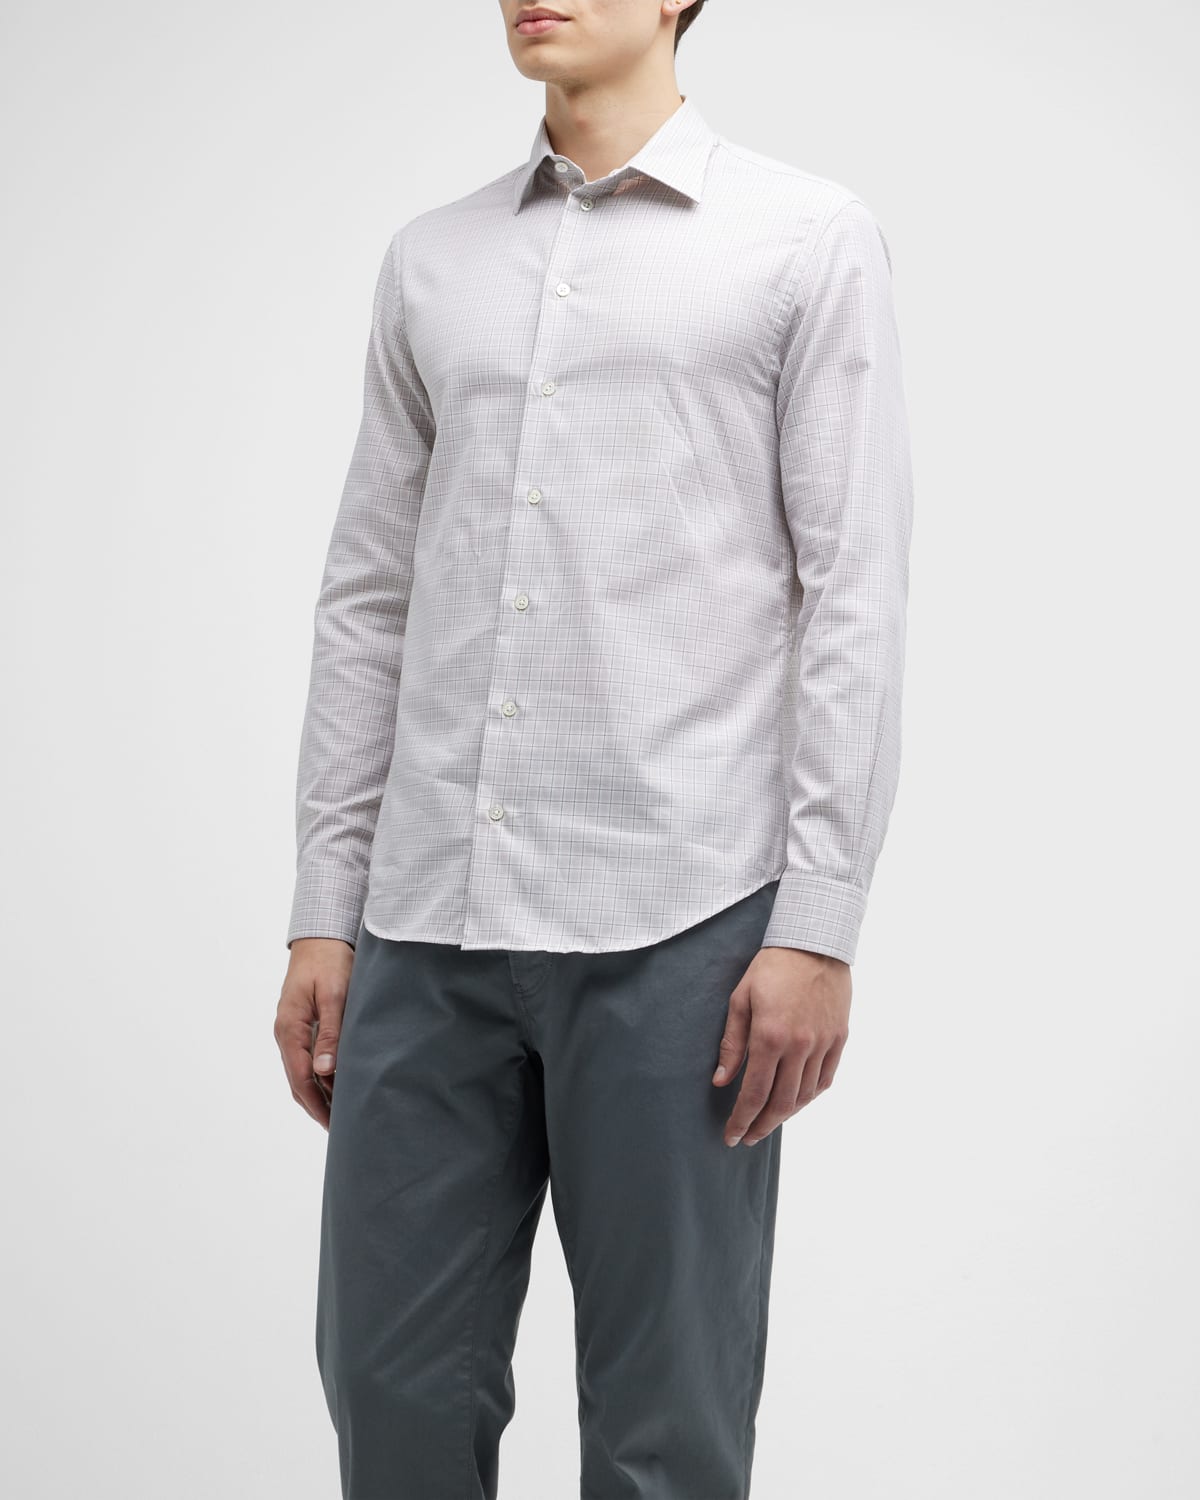 Emporio Armani Men's Grid Check Cotton Sport Shirt In Solid Medium Red